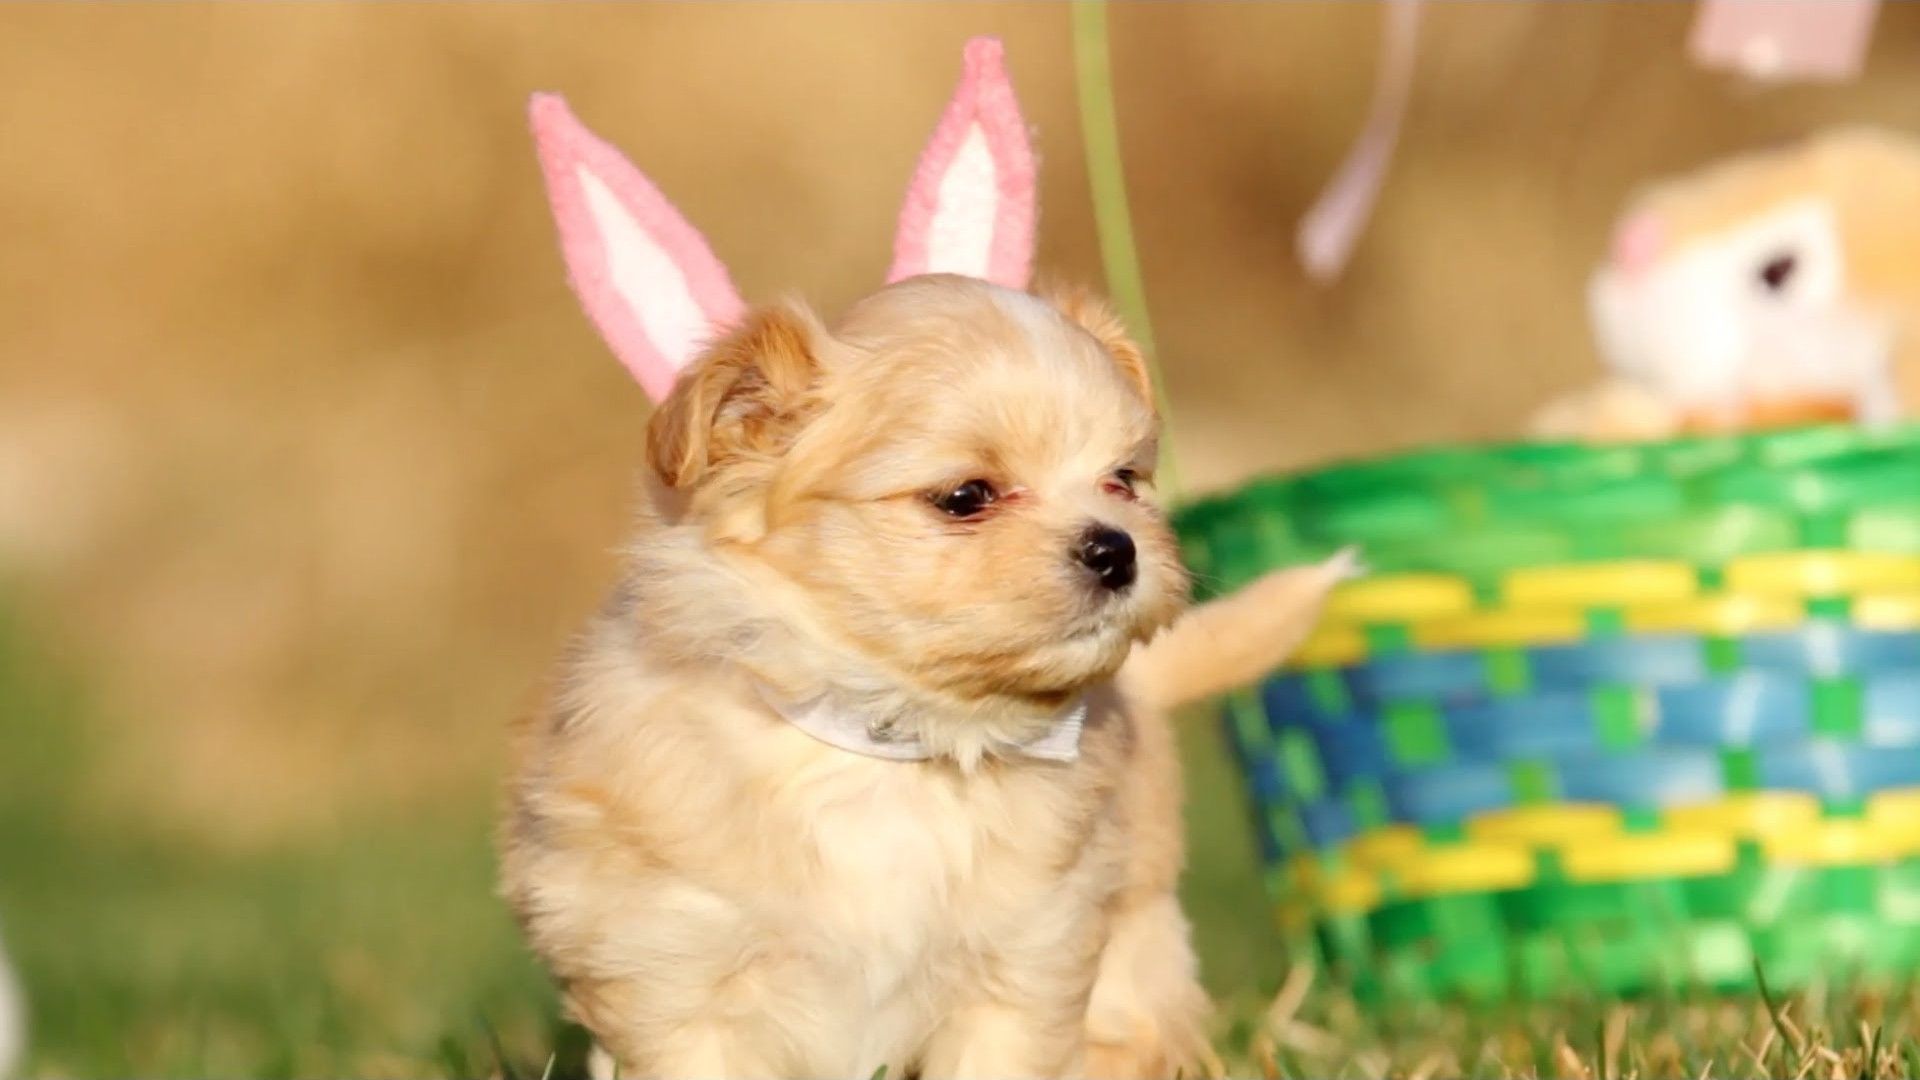 Wallpaper Puppies Desktop. Best HD Wallpaper. Puppies, Baby animals, Cute animals